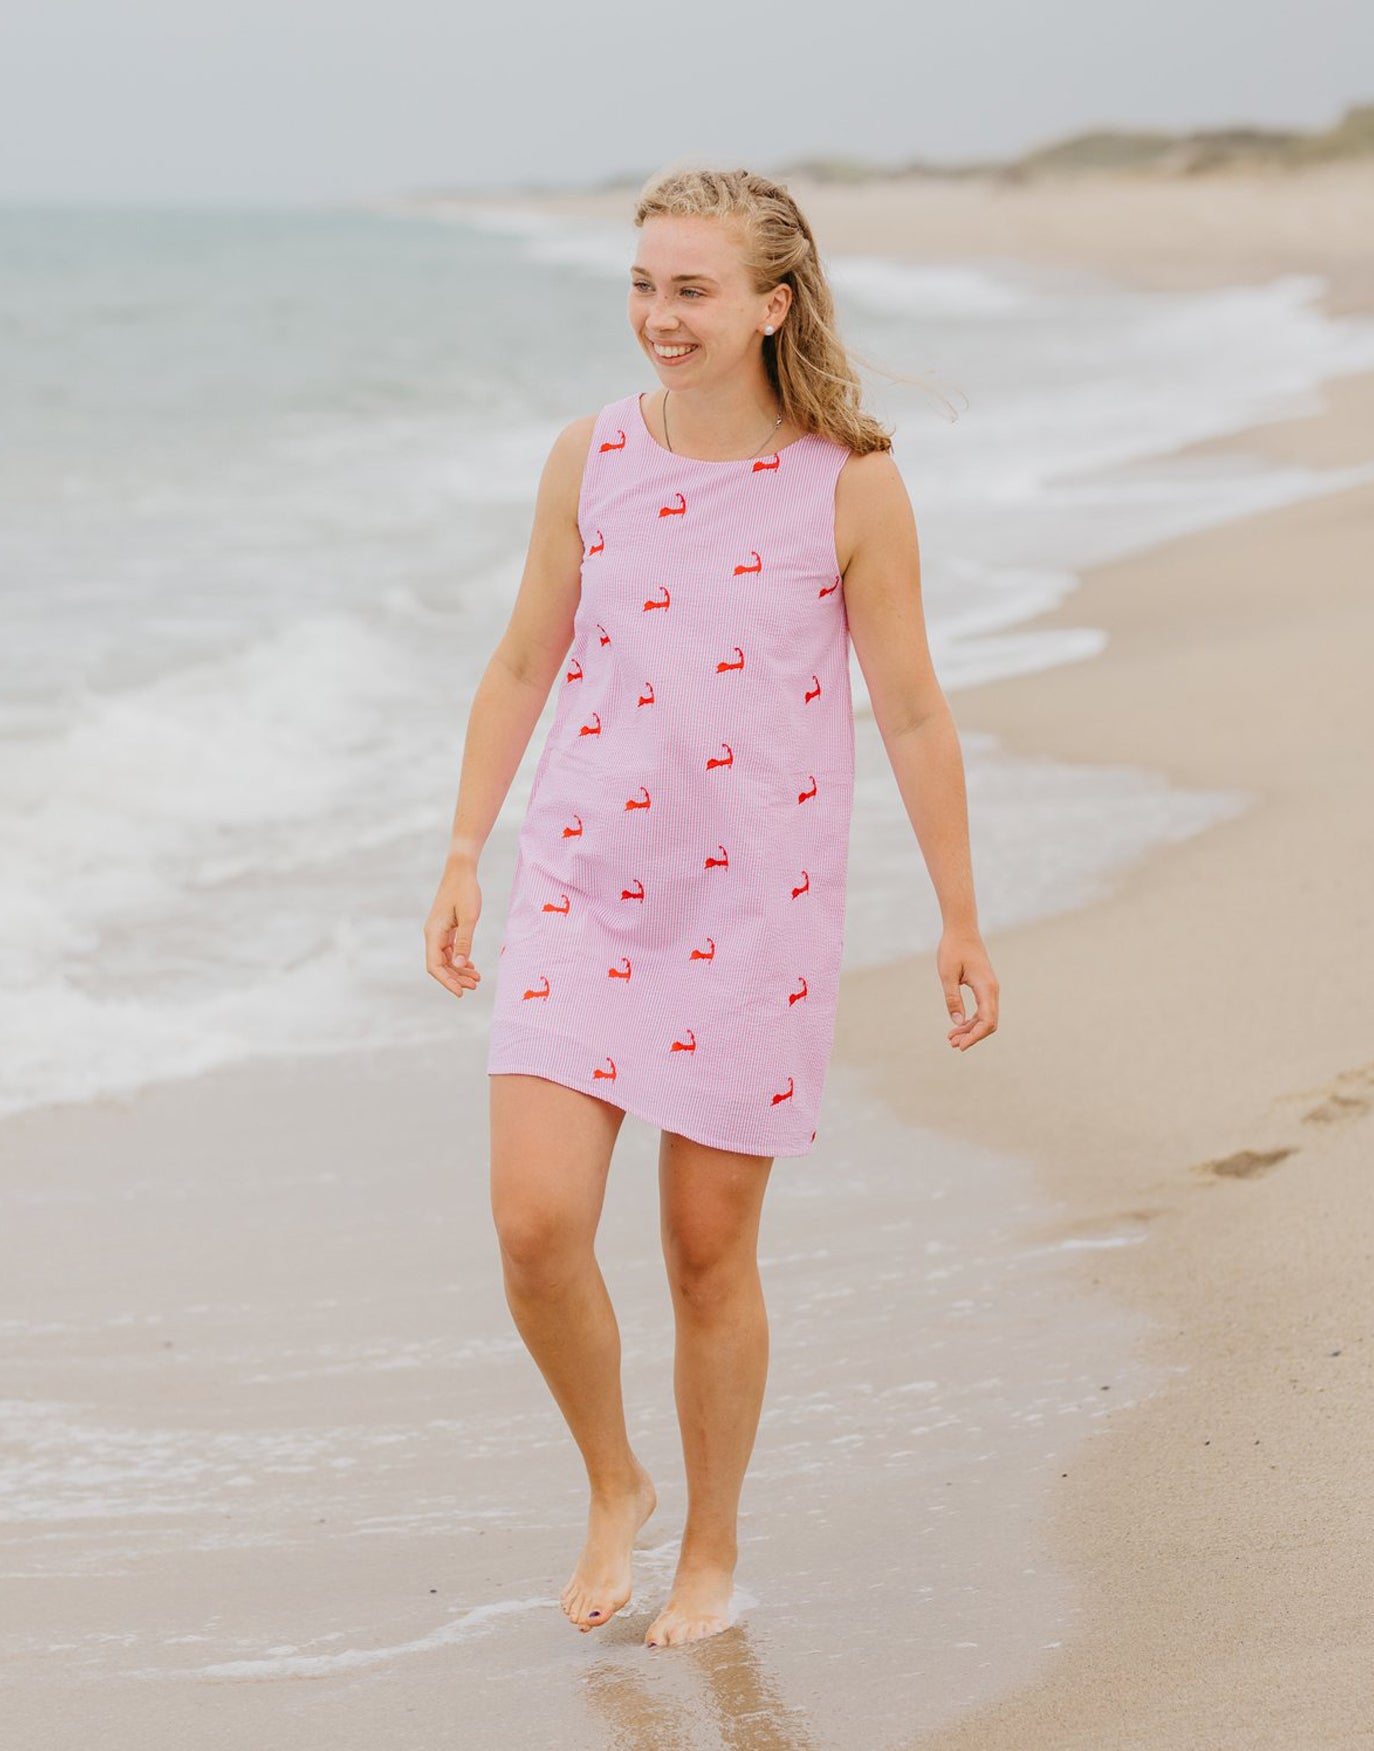 Pink Seersucker Women's Dress with Pink Embroidered Cape Cods